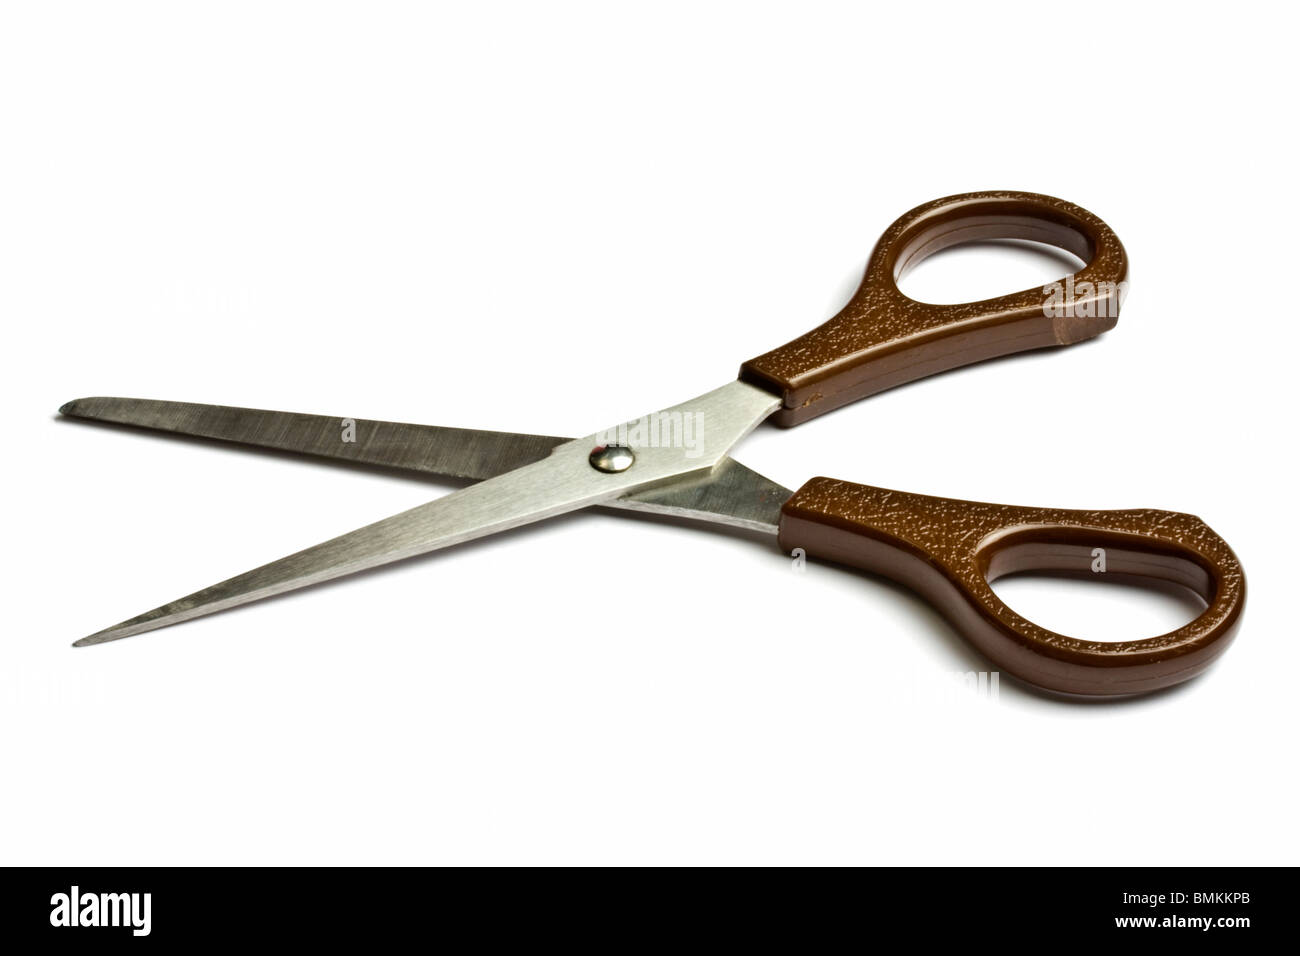 Open scissors isolated on white background Stock Photo